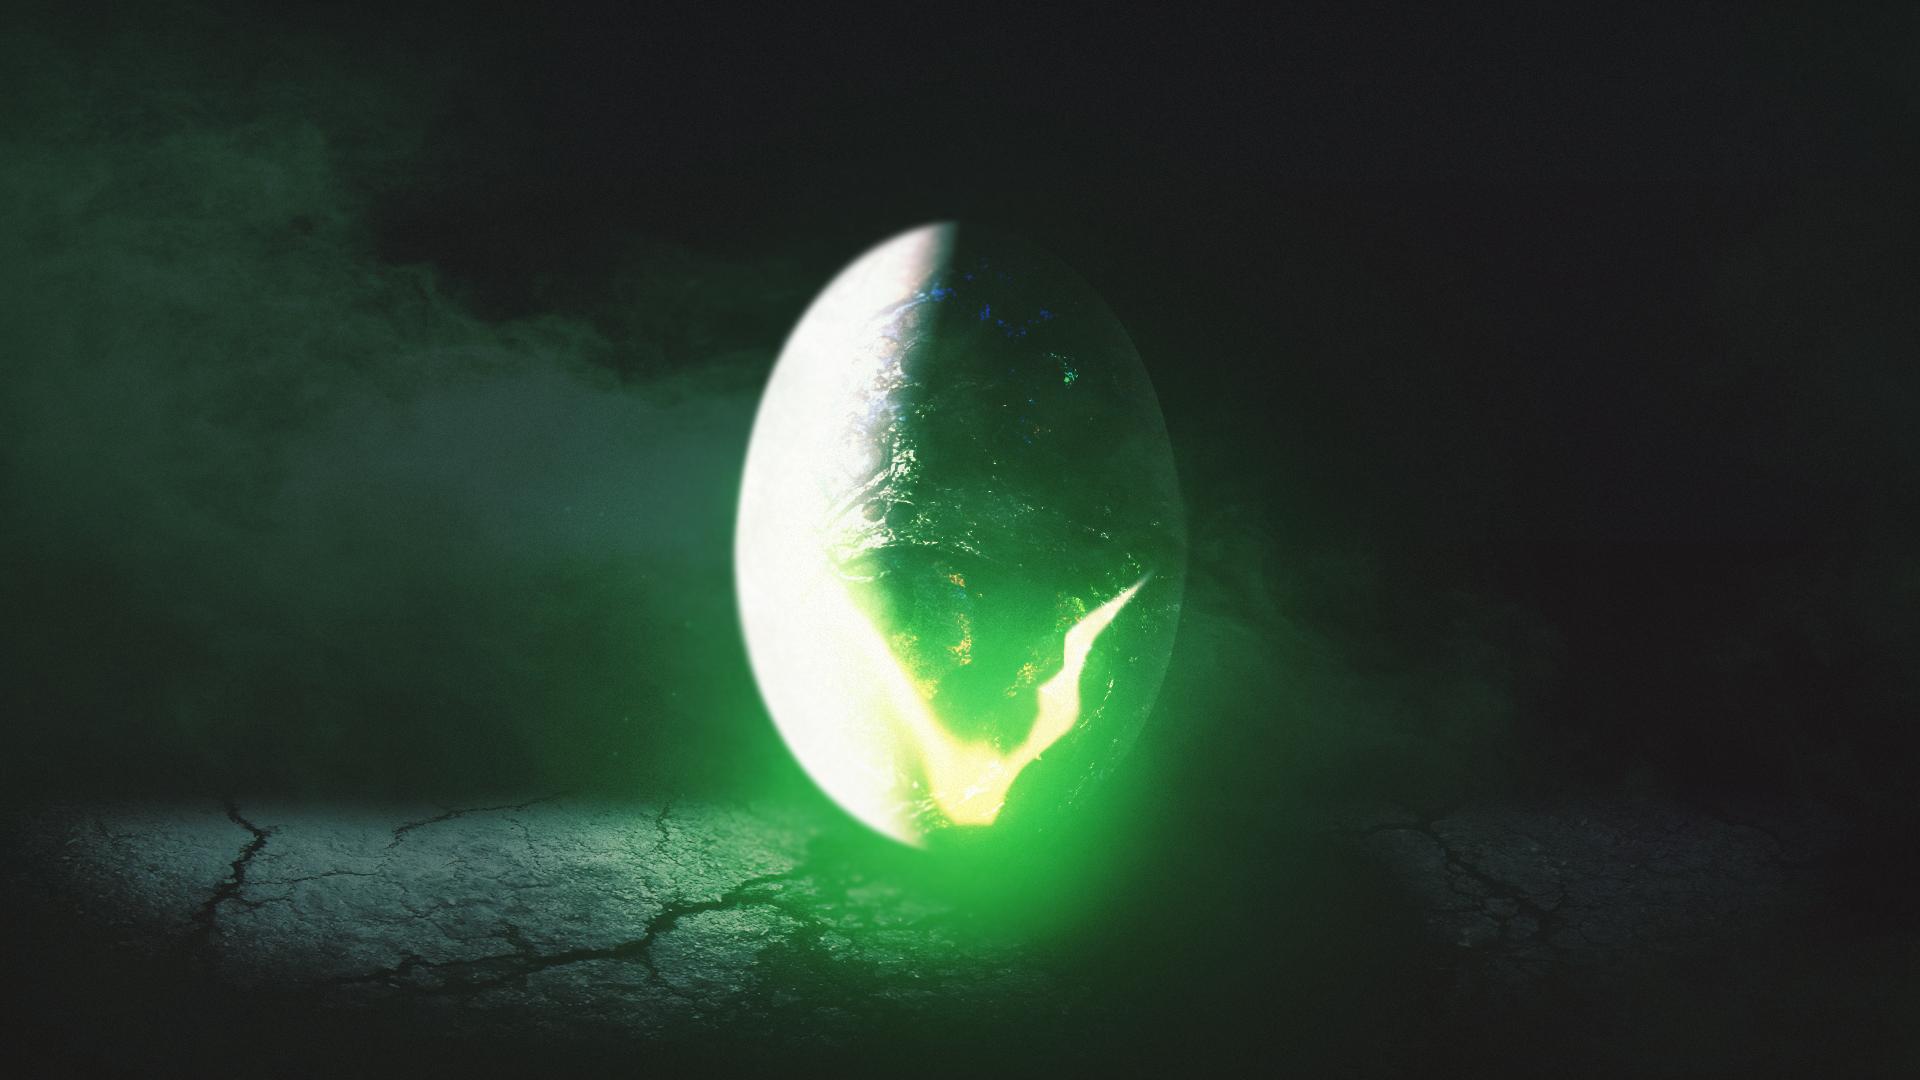 Alien egg thing desktop wallpaper. AI + PS + random image